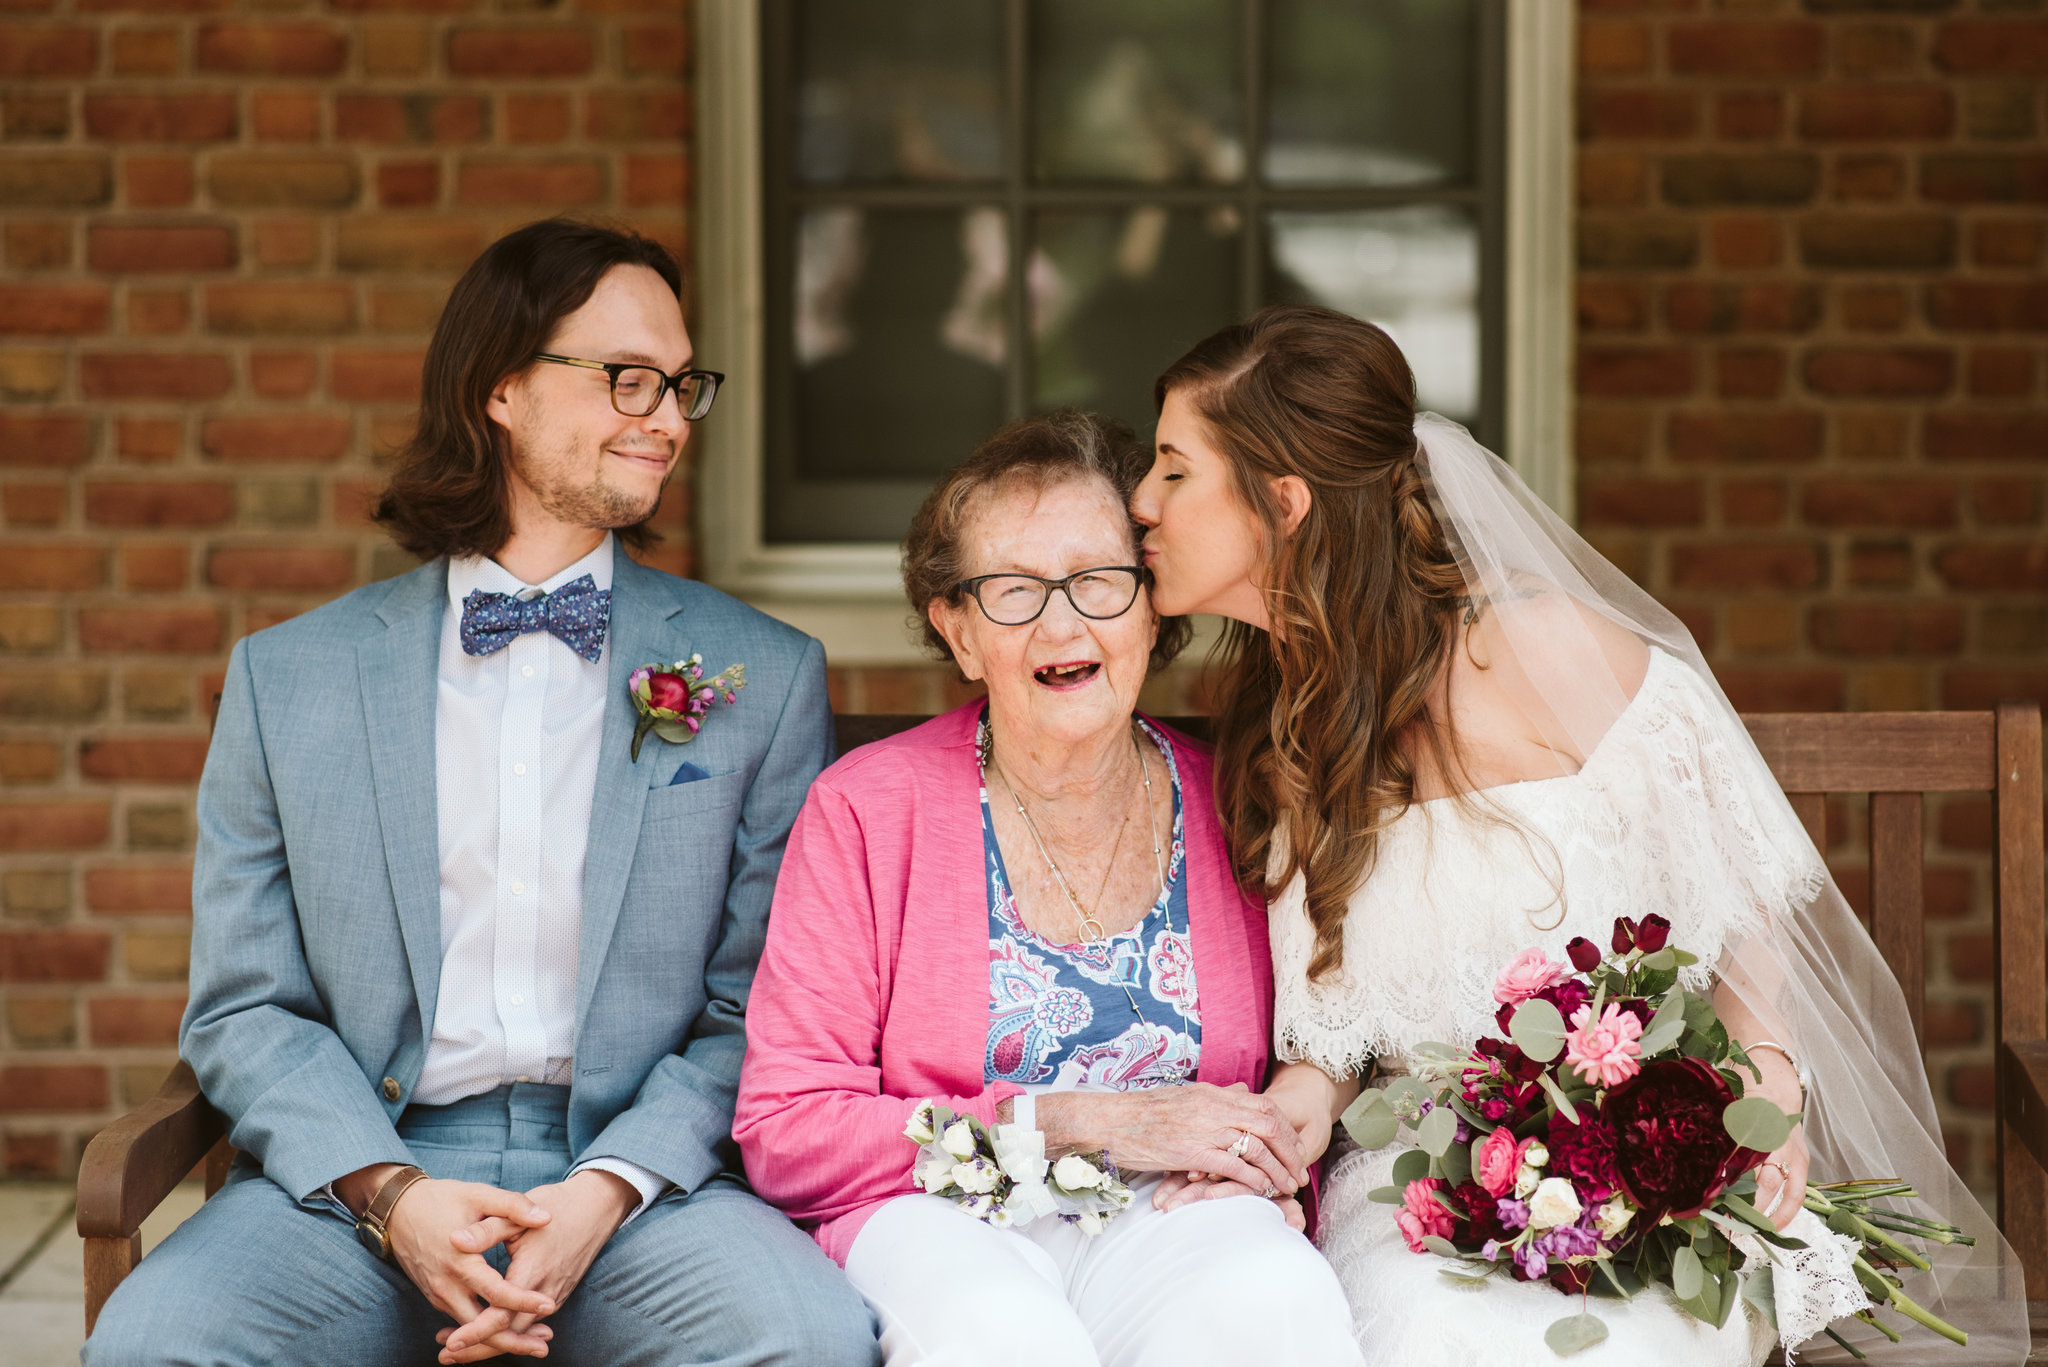  Annapolis, Quaker Wedding, Maryland Wedding Photographer, Intimate, Small Wedding, Vintage, DIY, Sweet photo of Bride and Groom with Grandmother 